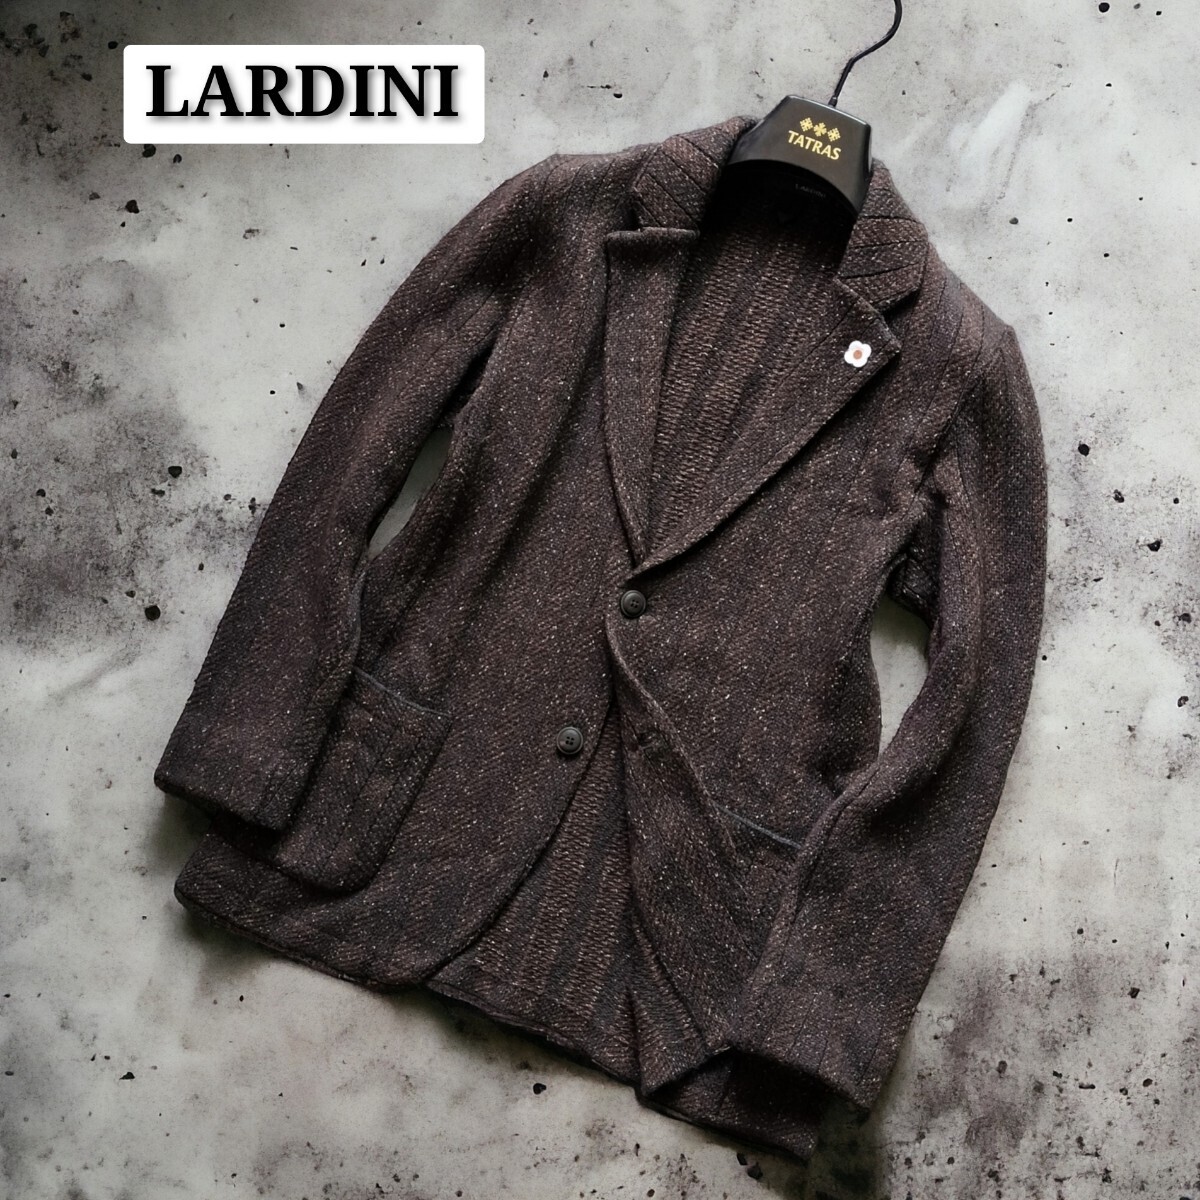  ultimate beautiful goods *LARDINI tailored jacket top class silk silk knitted jacket tea Brown shadow stripe Italy made b-tonie-ru1 jpy 